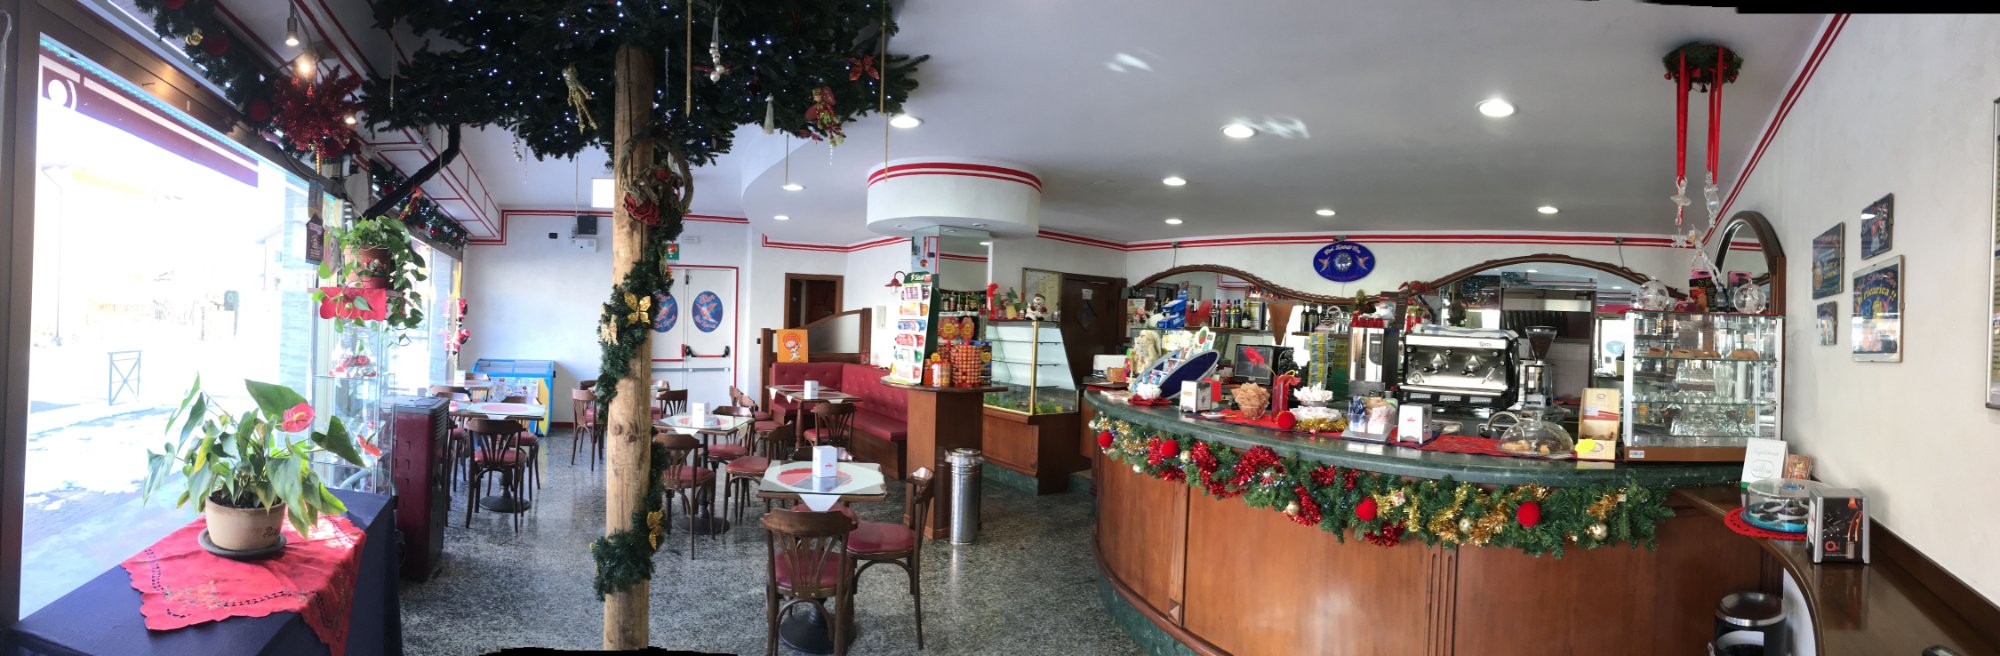 Red Spirit Bar, Avigliana